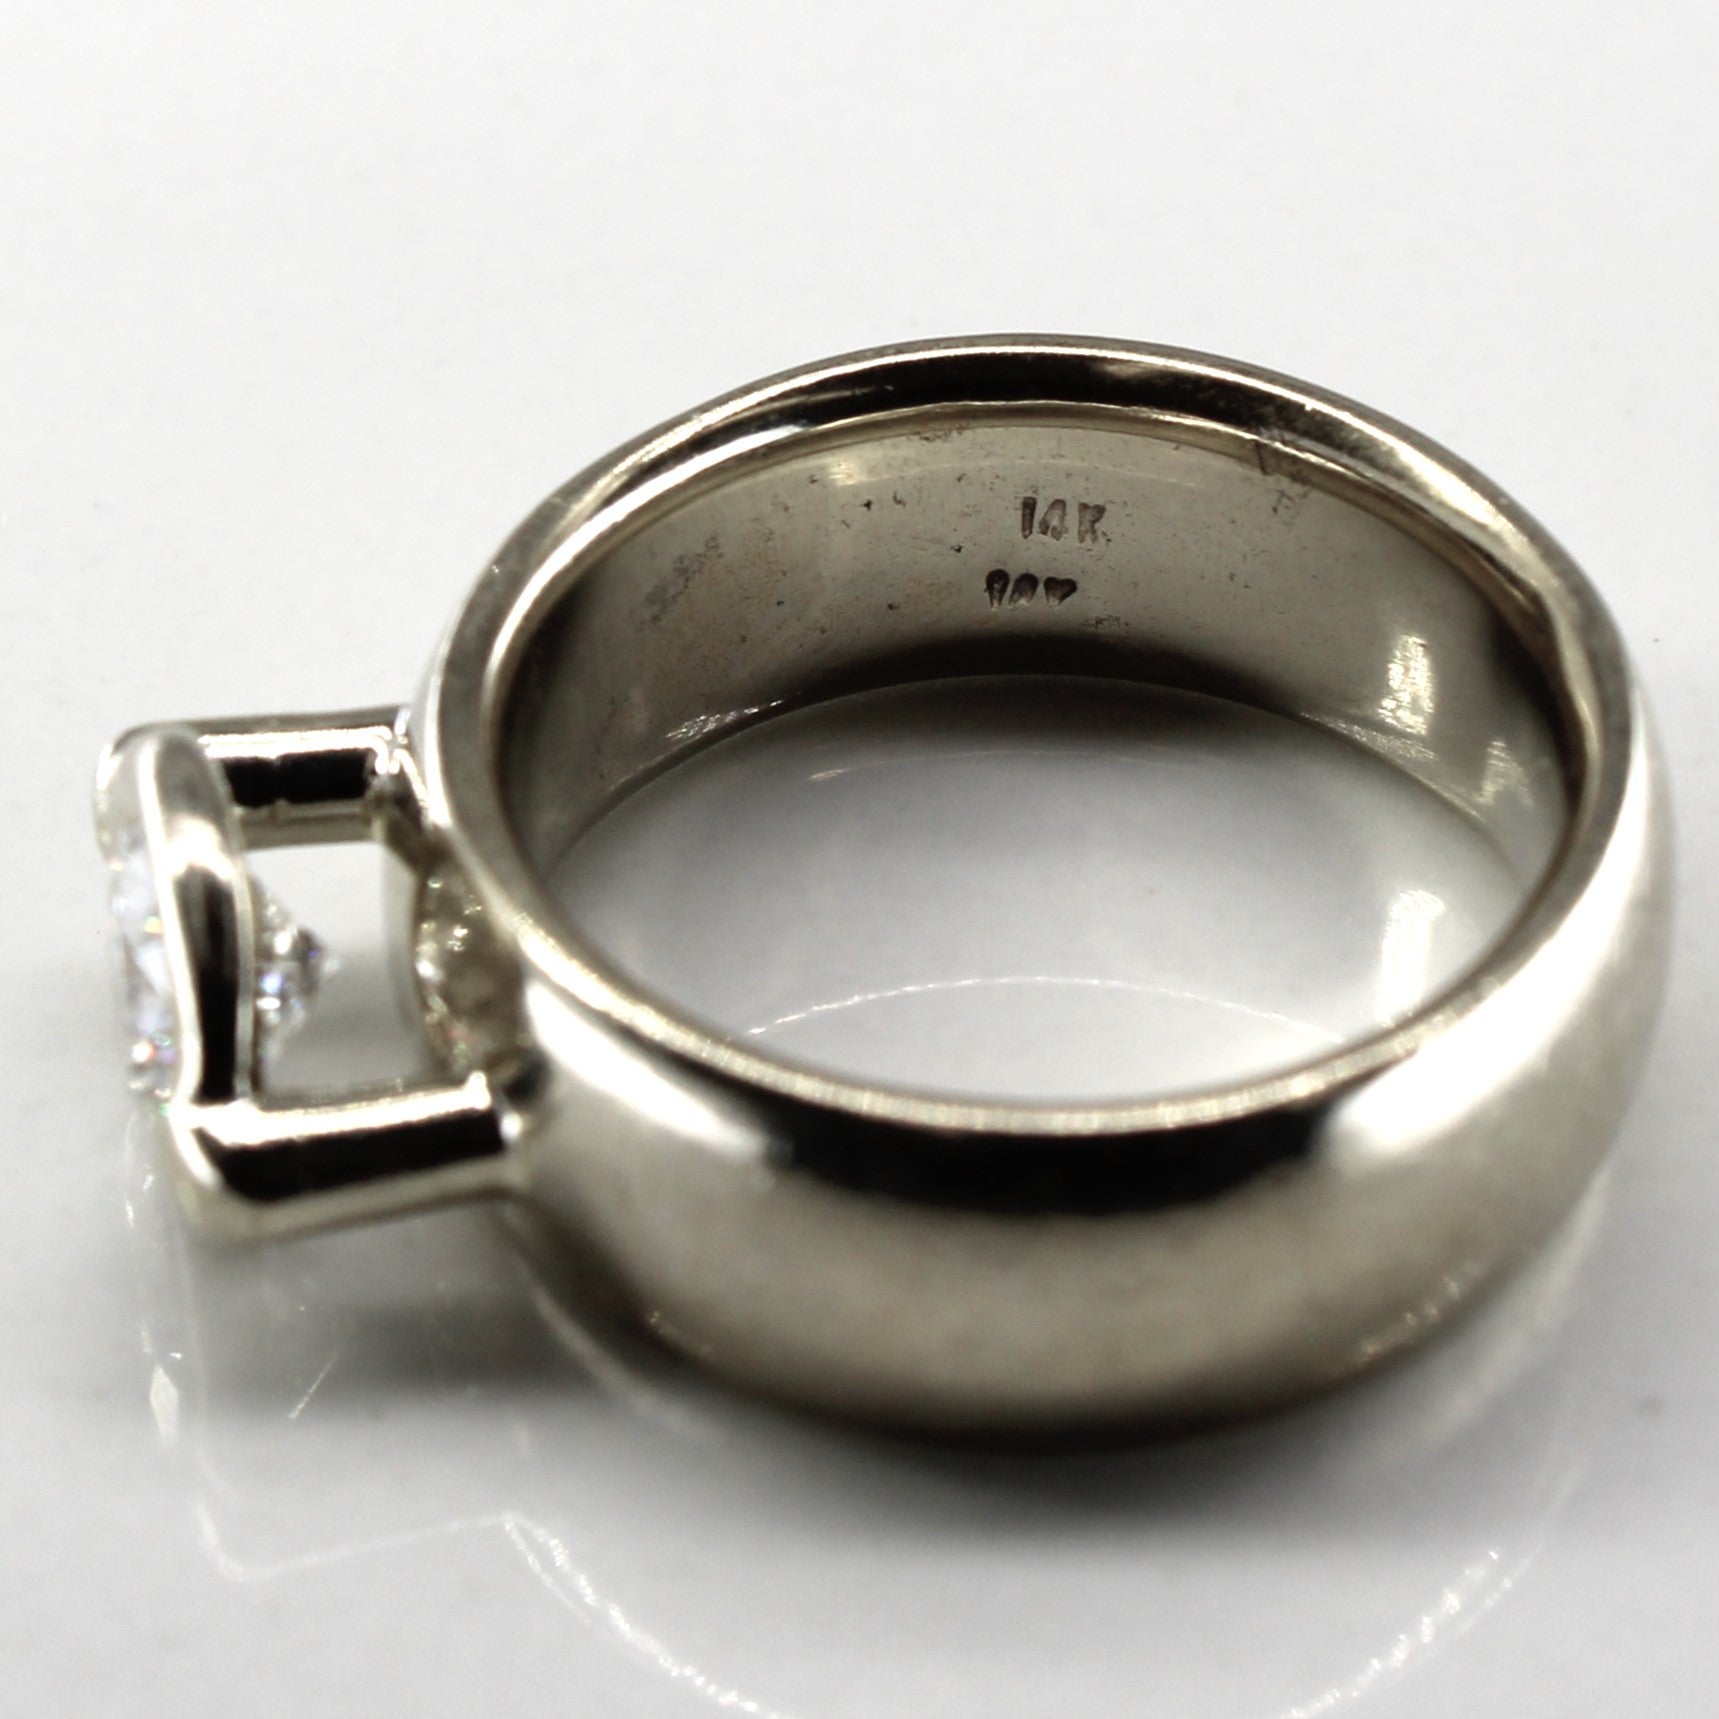 Bezel Set Solitaire Diamond Ring | 0.72ctw | SZ 5.5 |